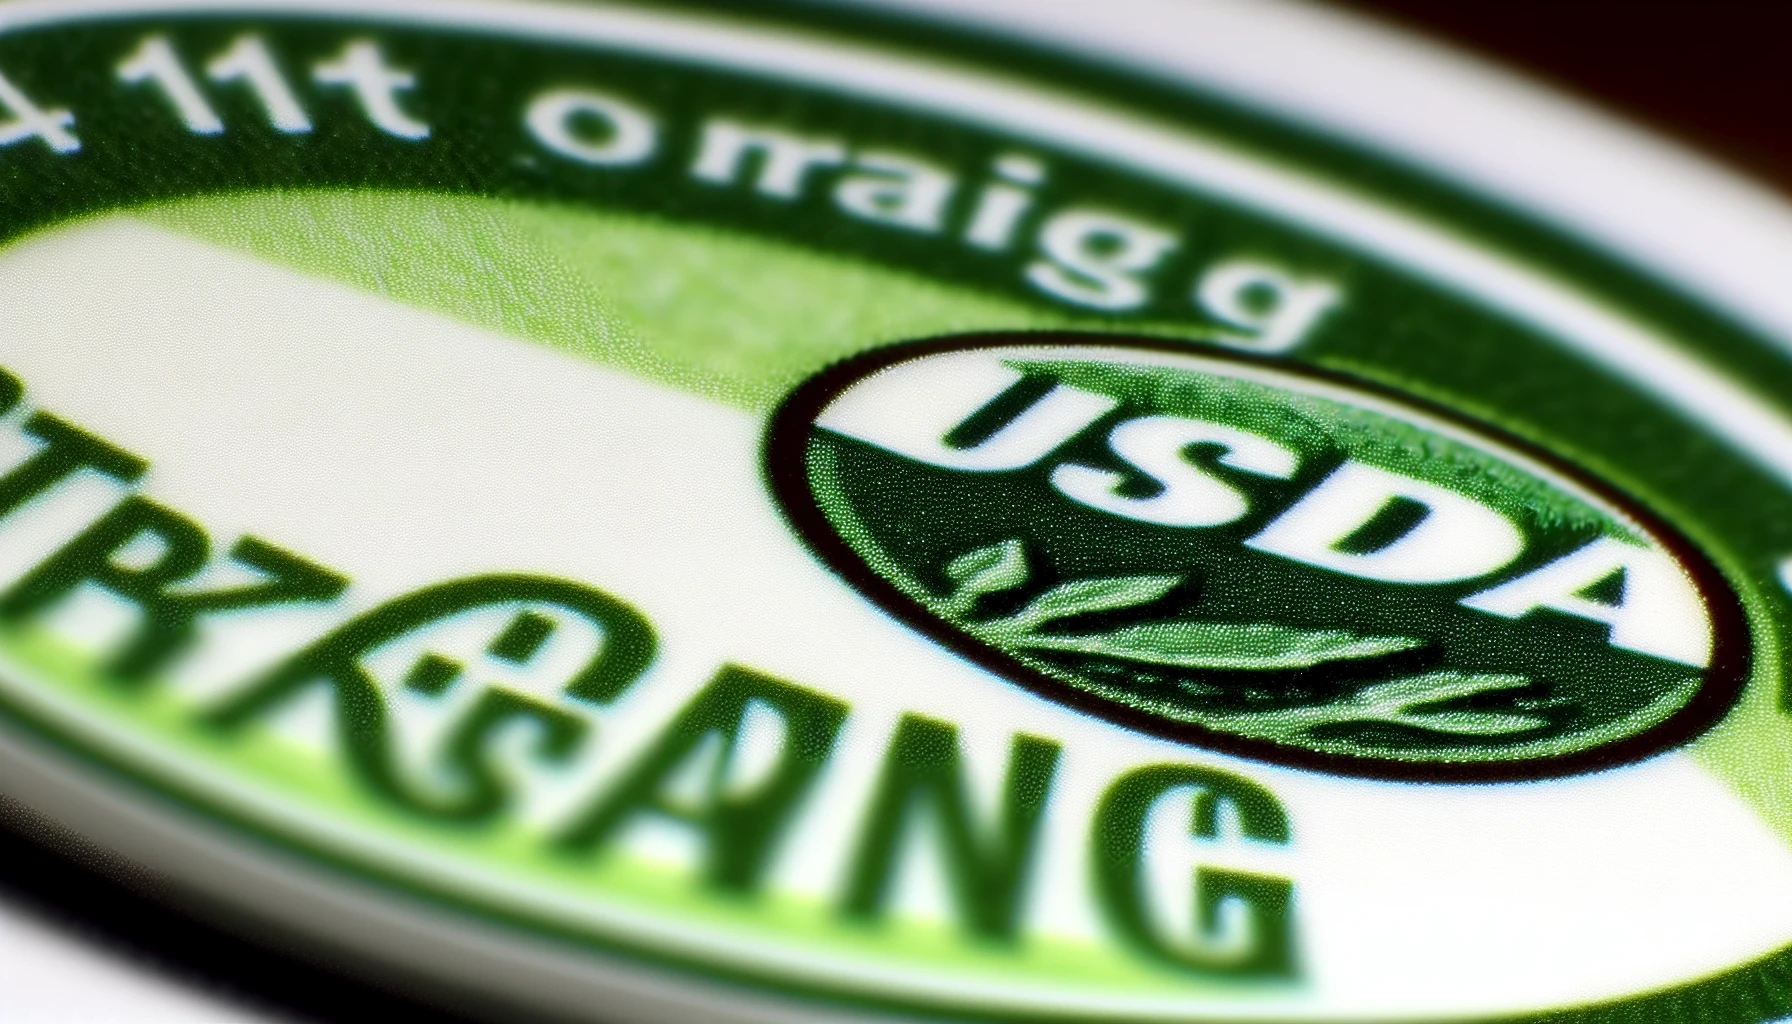 USDA Organic Seal close-up